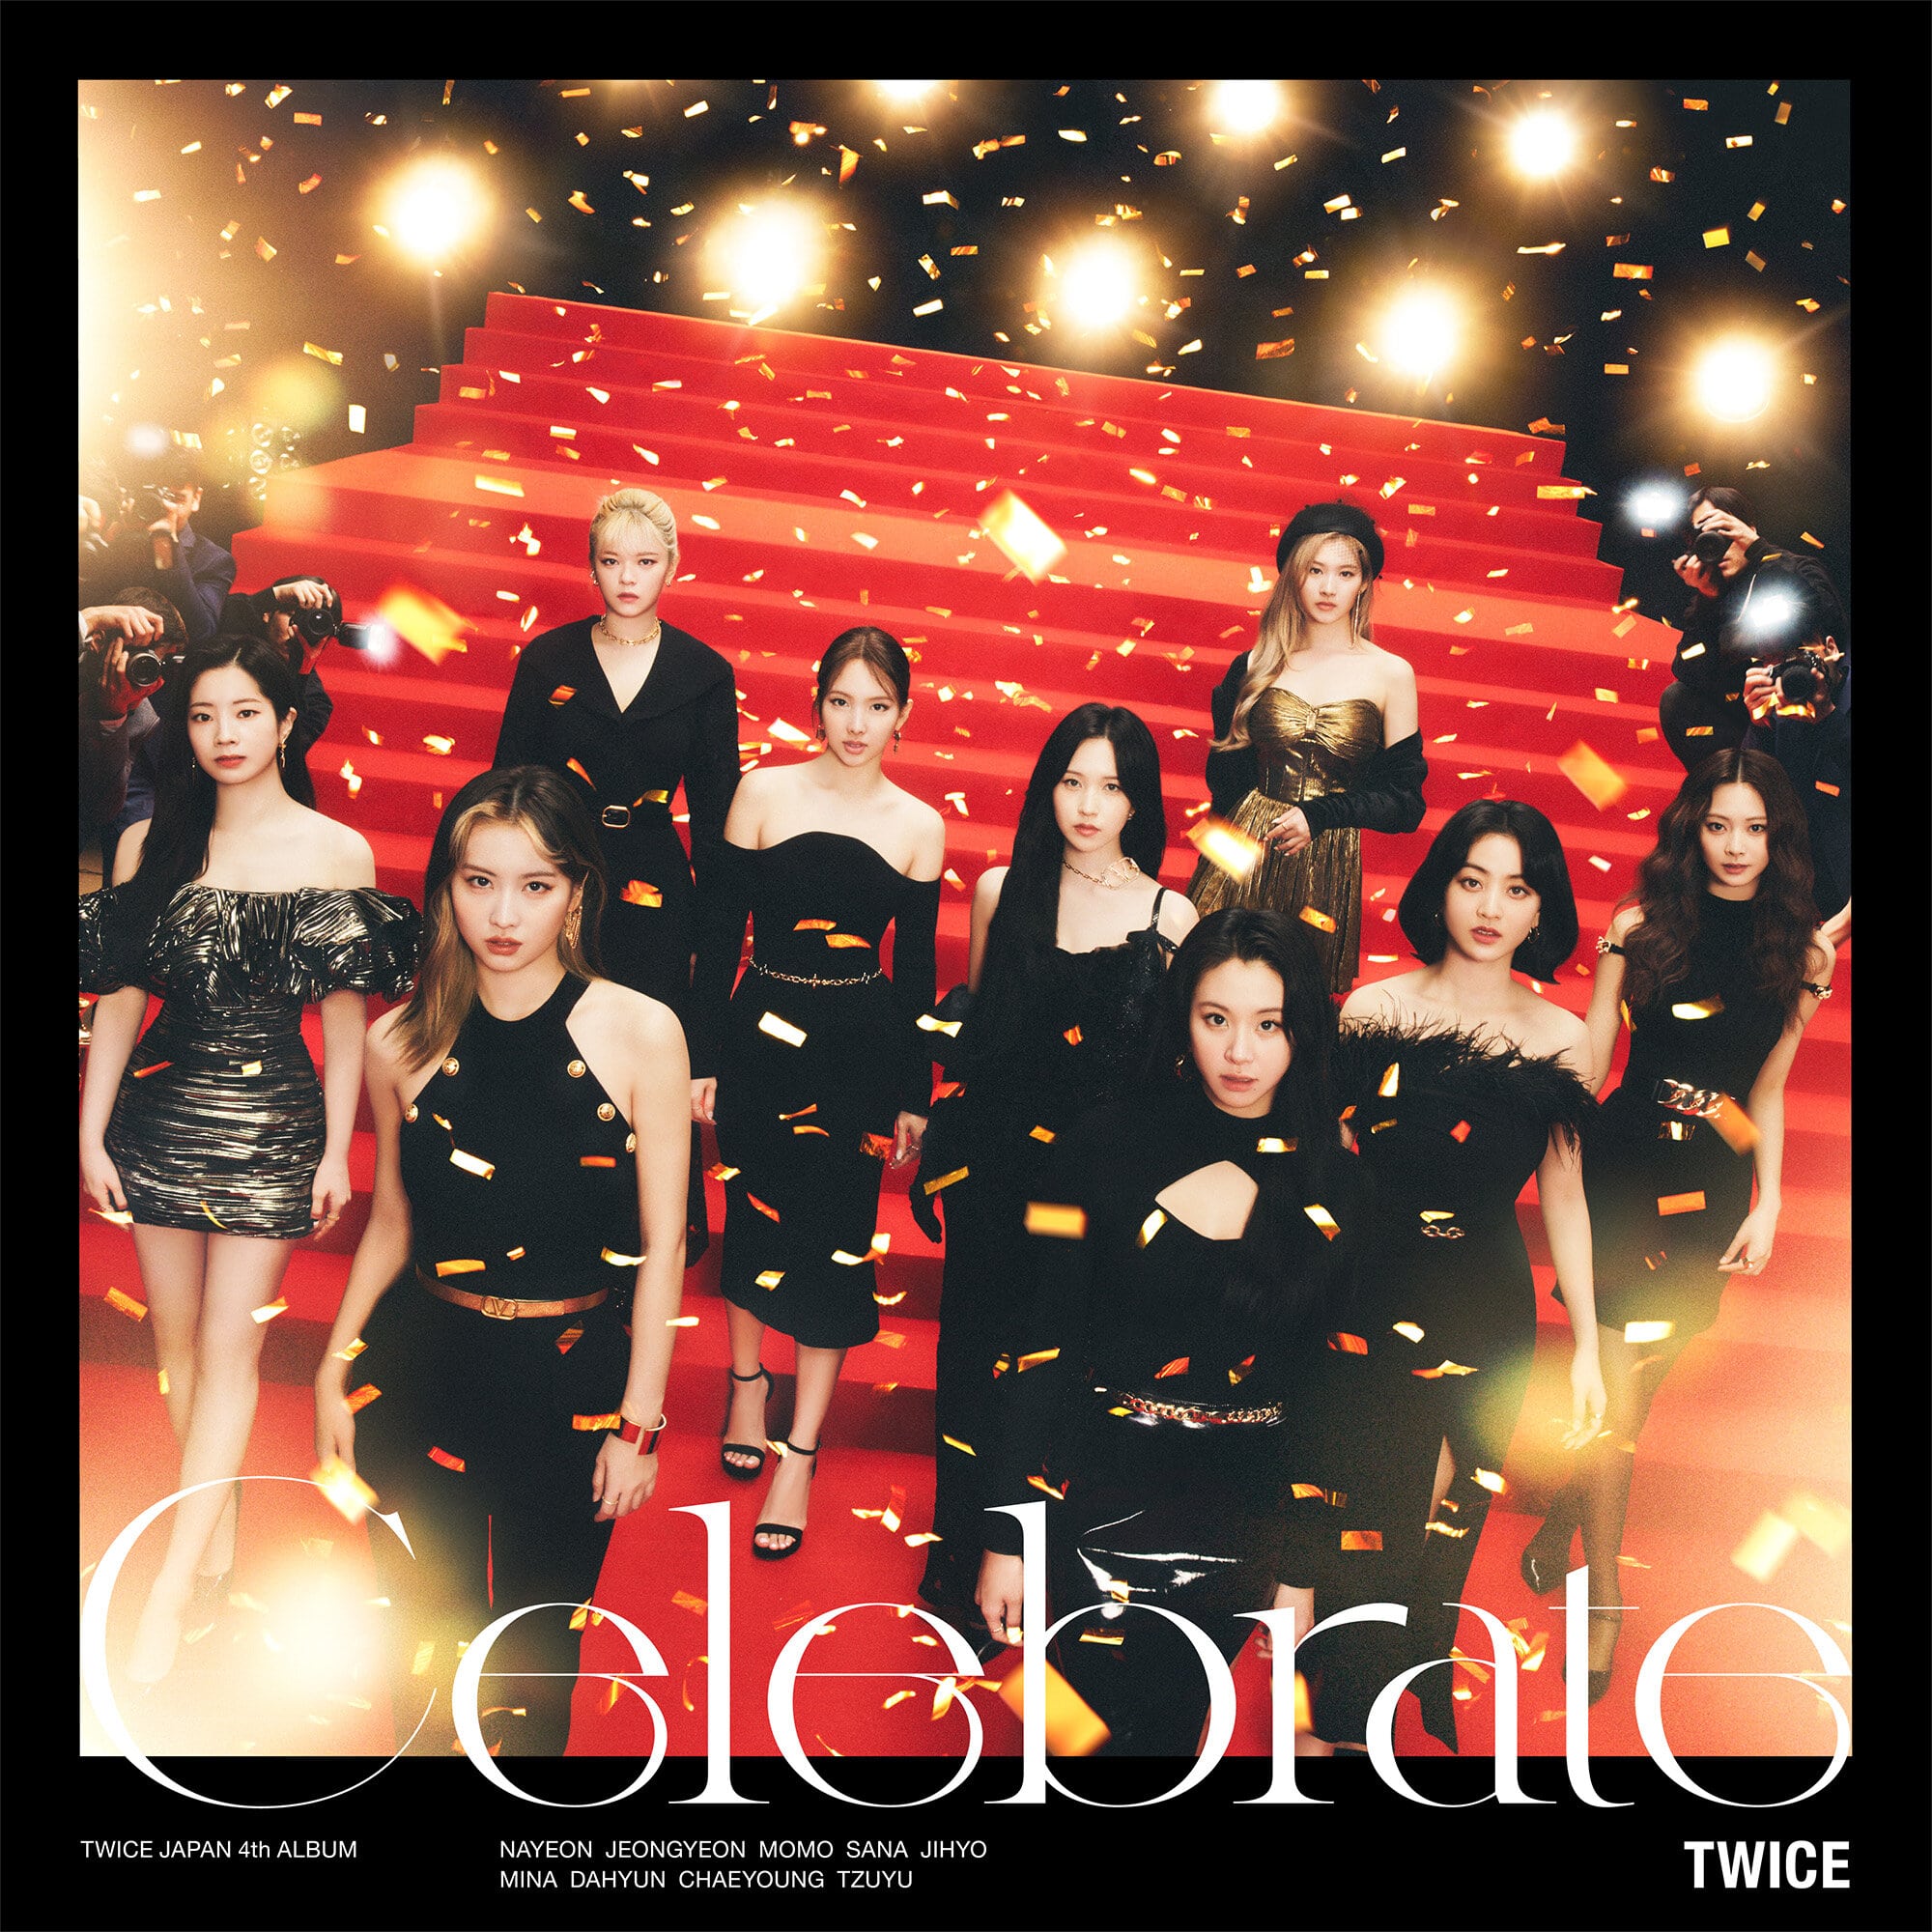 TWICE’s upcoming Japanese album ‘Celebrate’